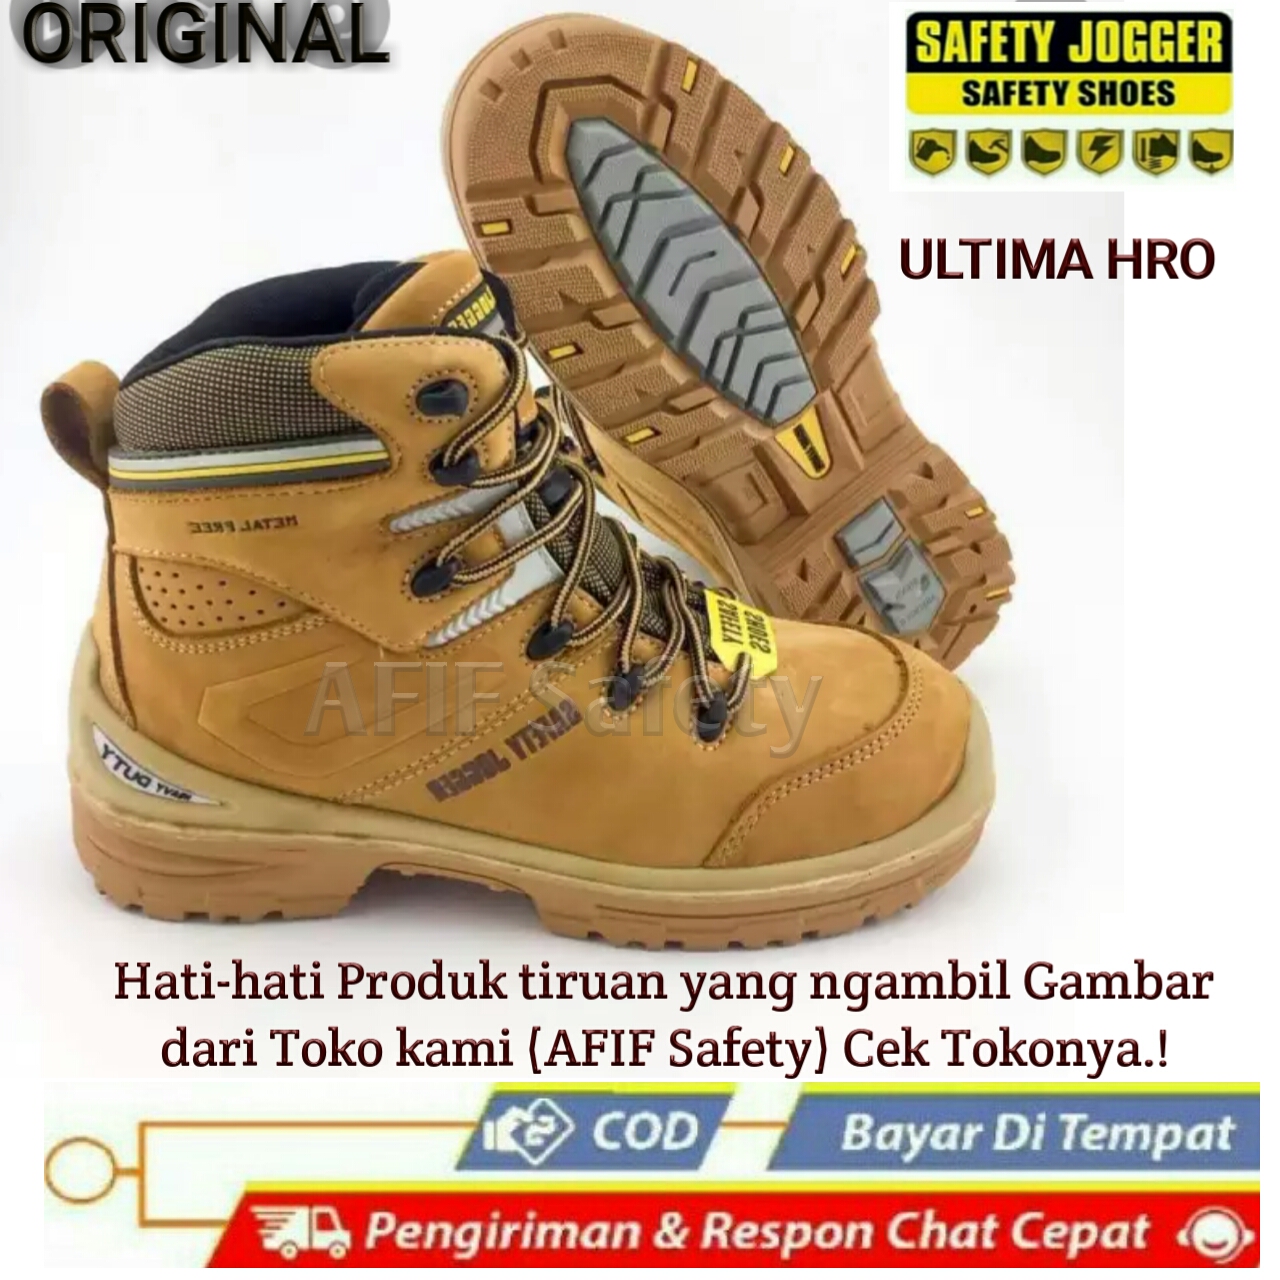 Sepatu Safety Jogger ULTIMA S3 HRO / Safety Joger Ultima / Safety Boots / Sepatu Pria / Safety Jogger